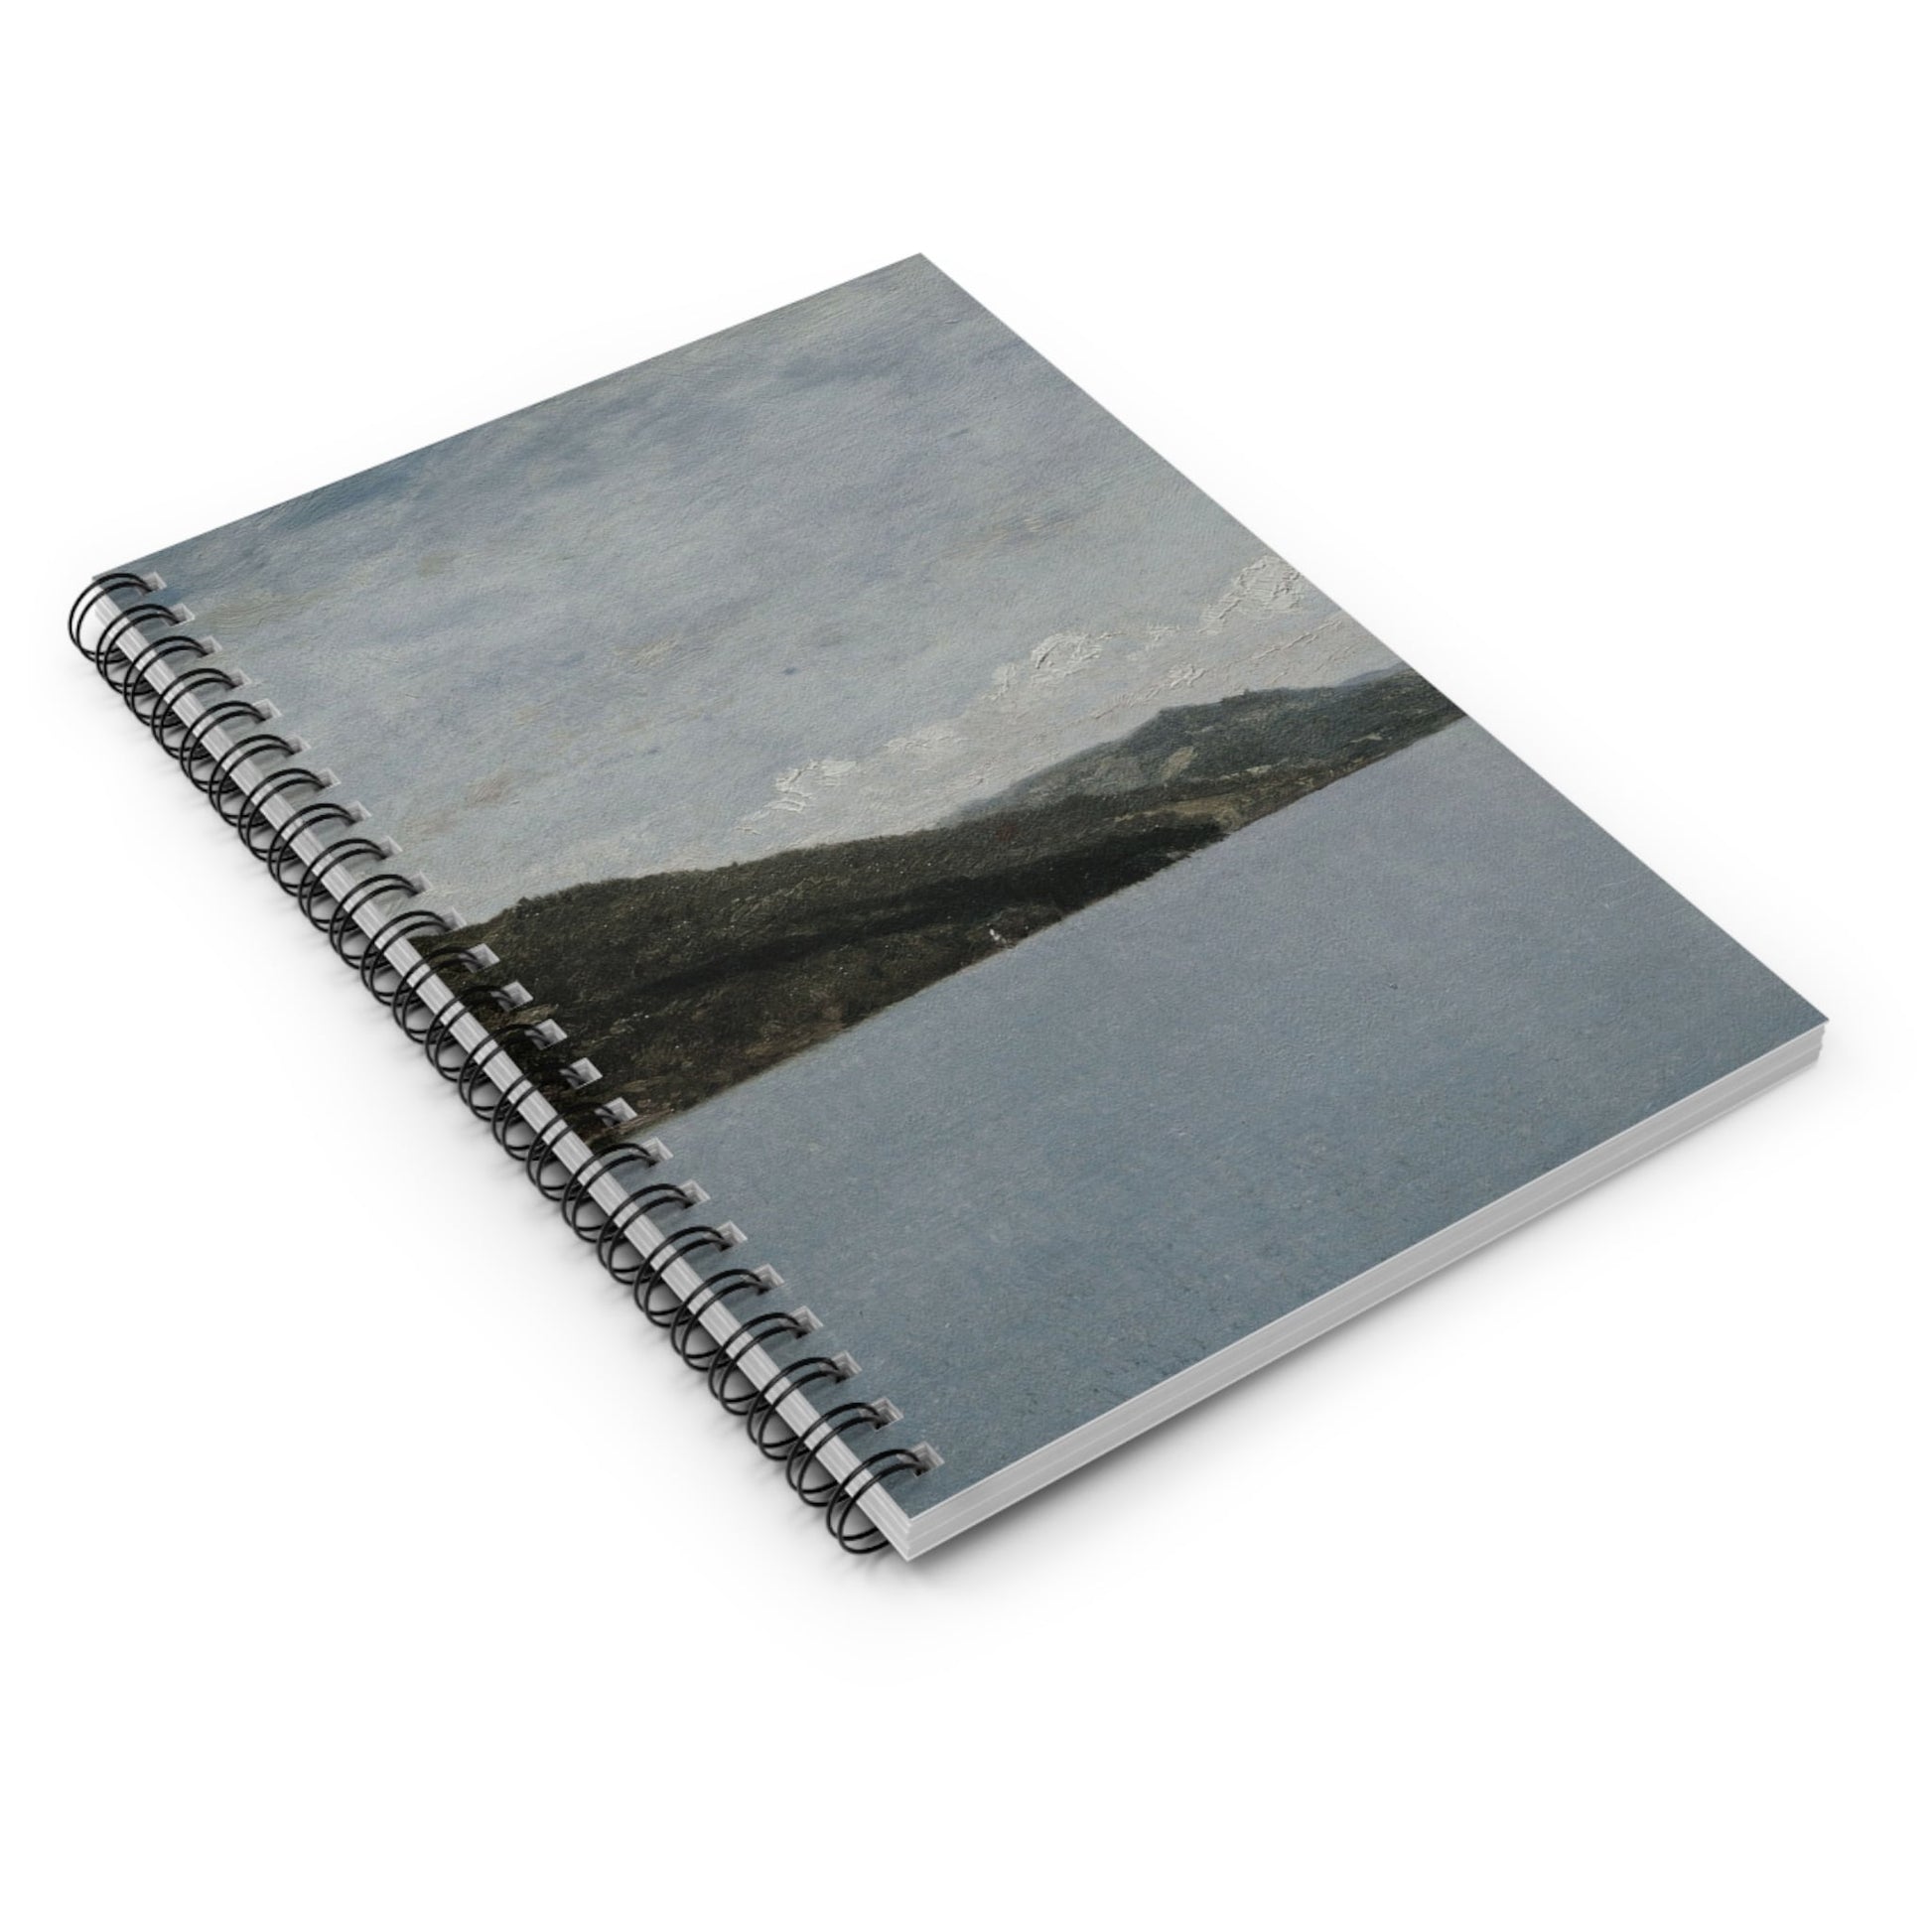 Minimalist Landscape Spiral Notebook Laying Flat on White Surface